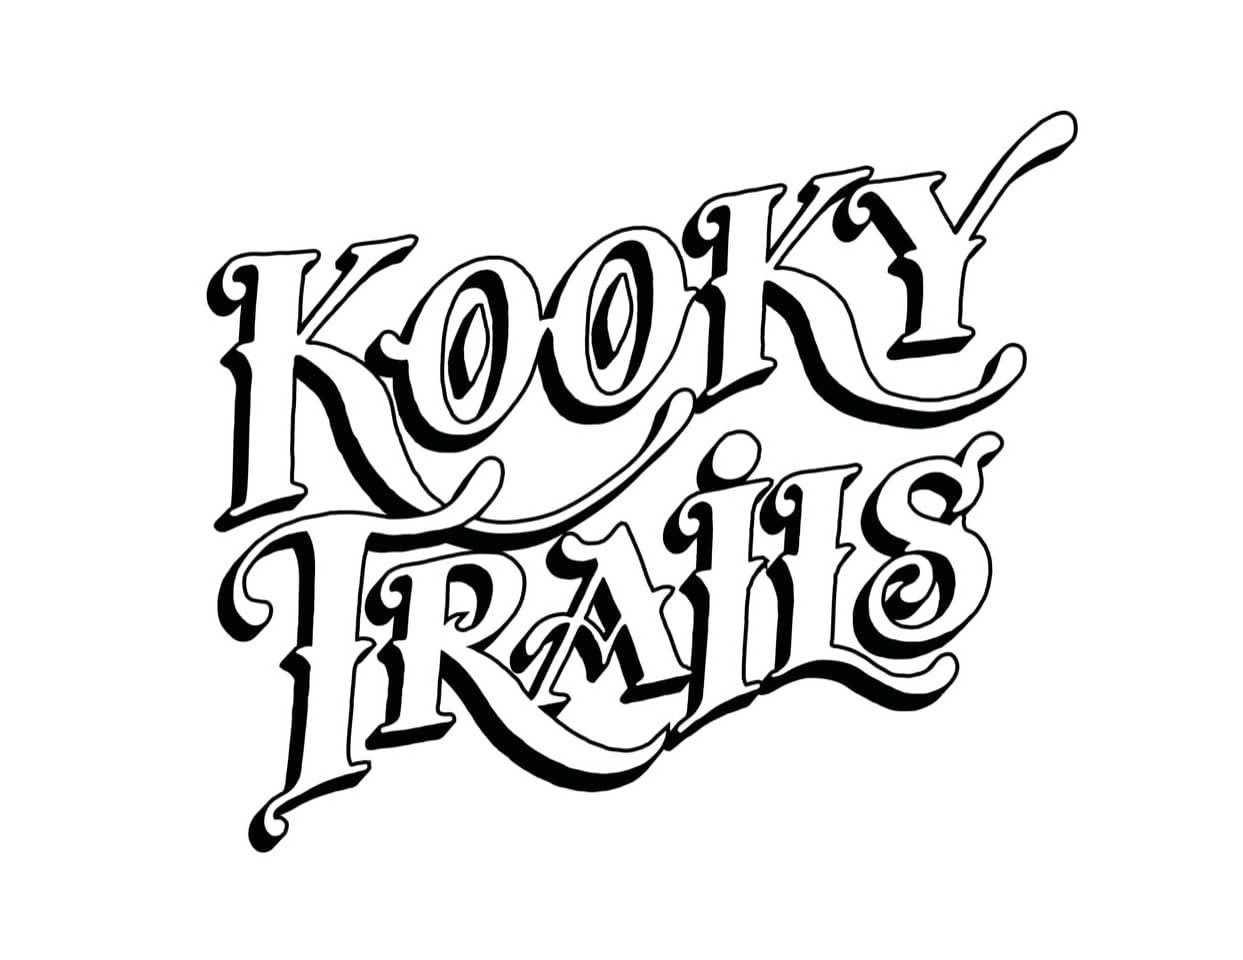  KOOKY TRAILS